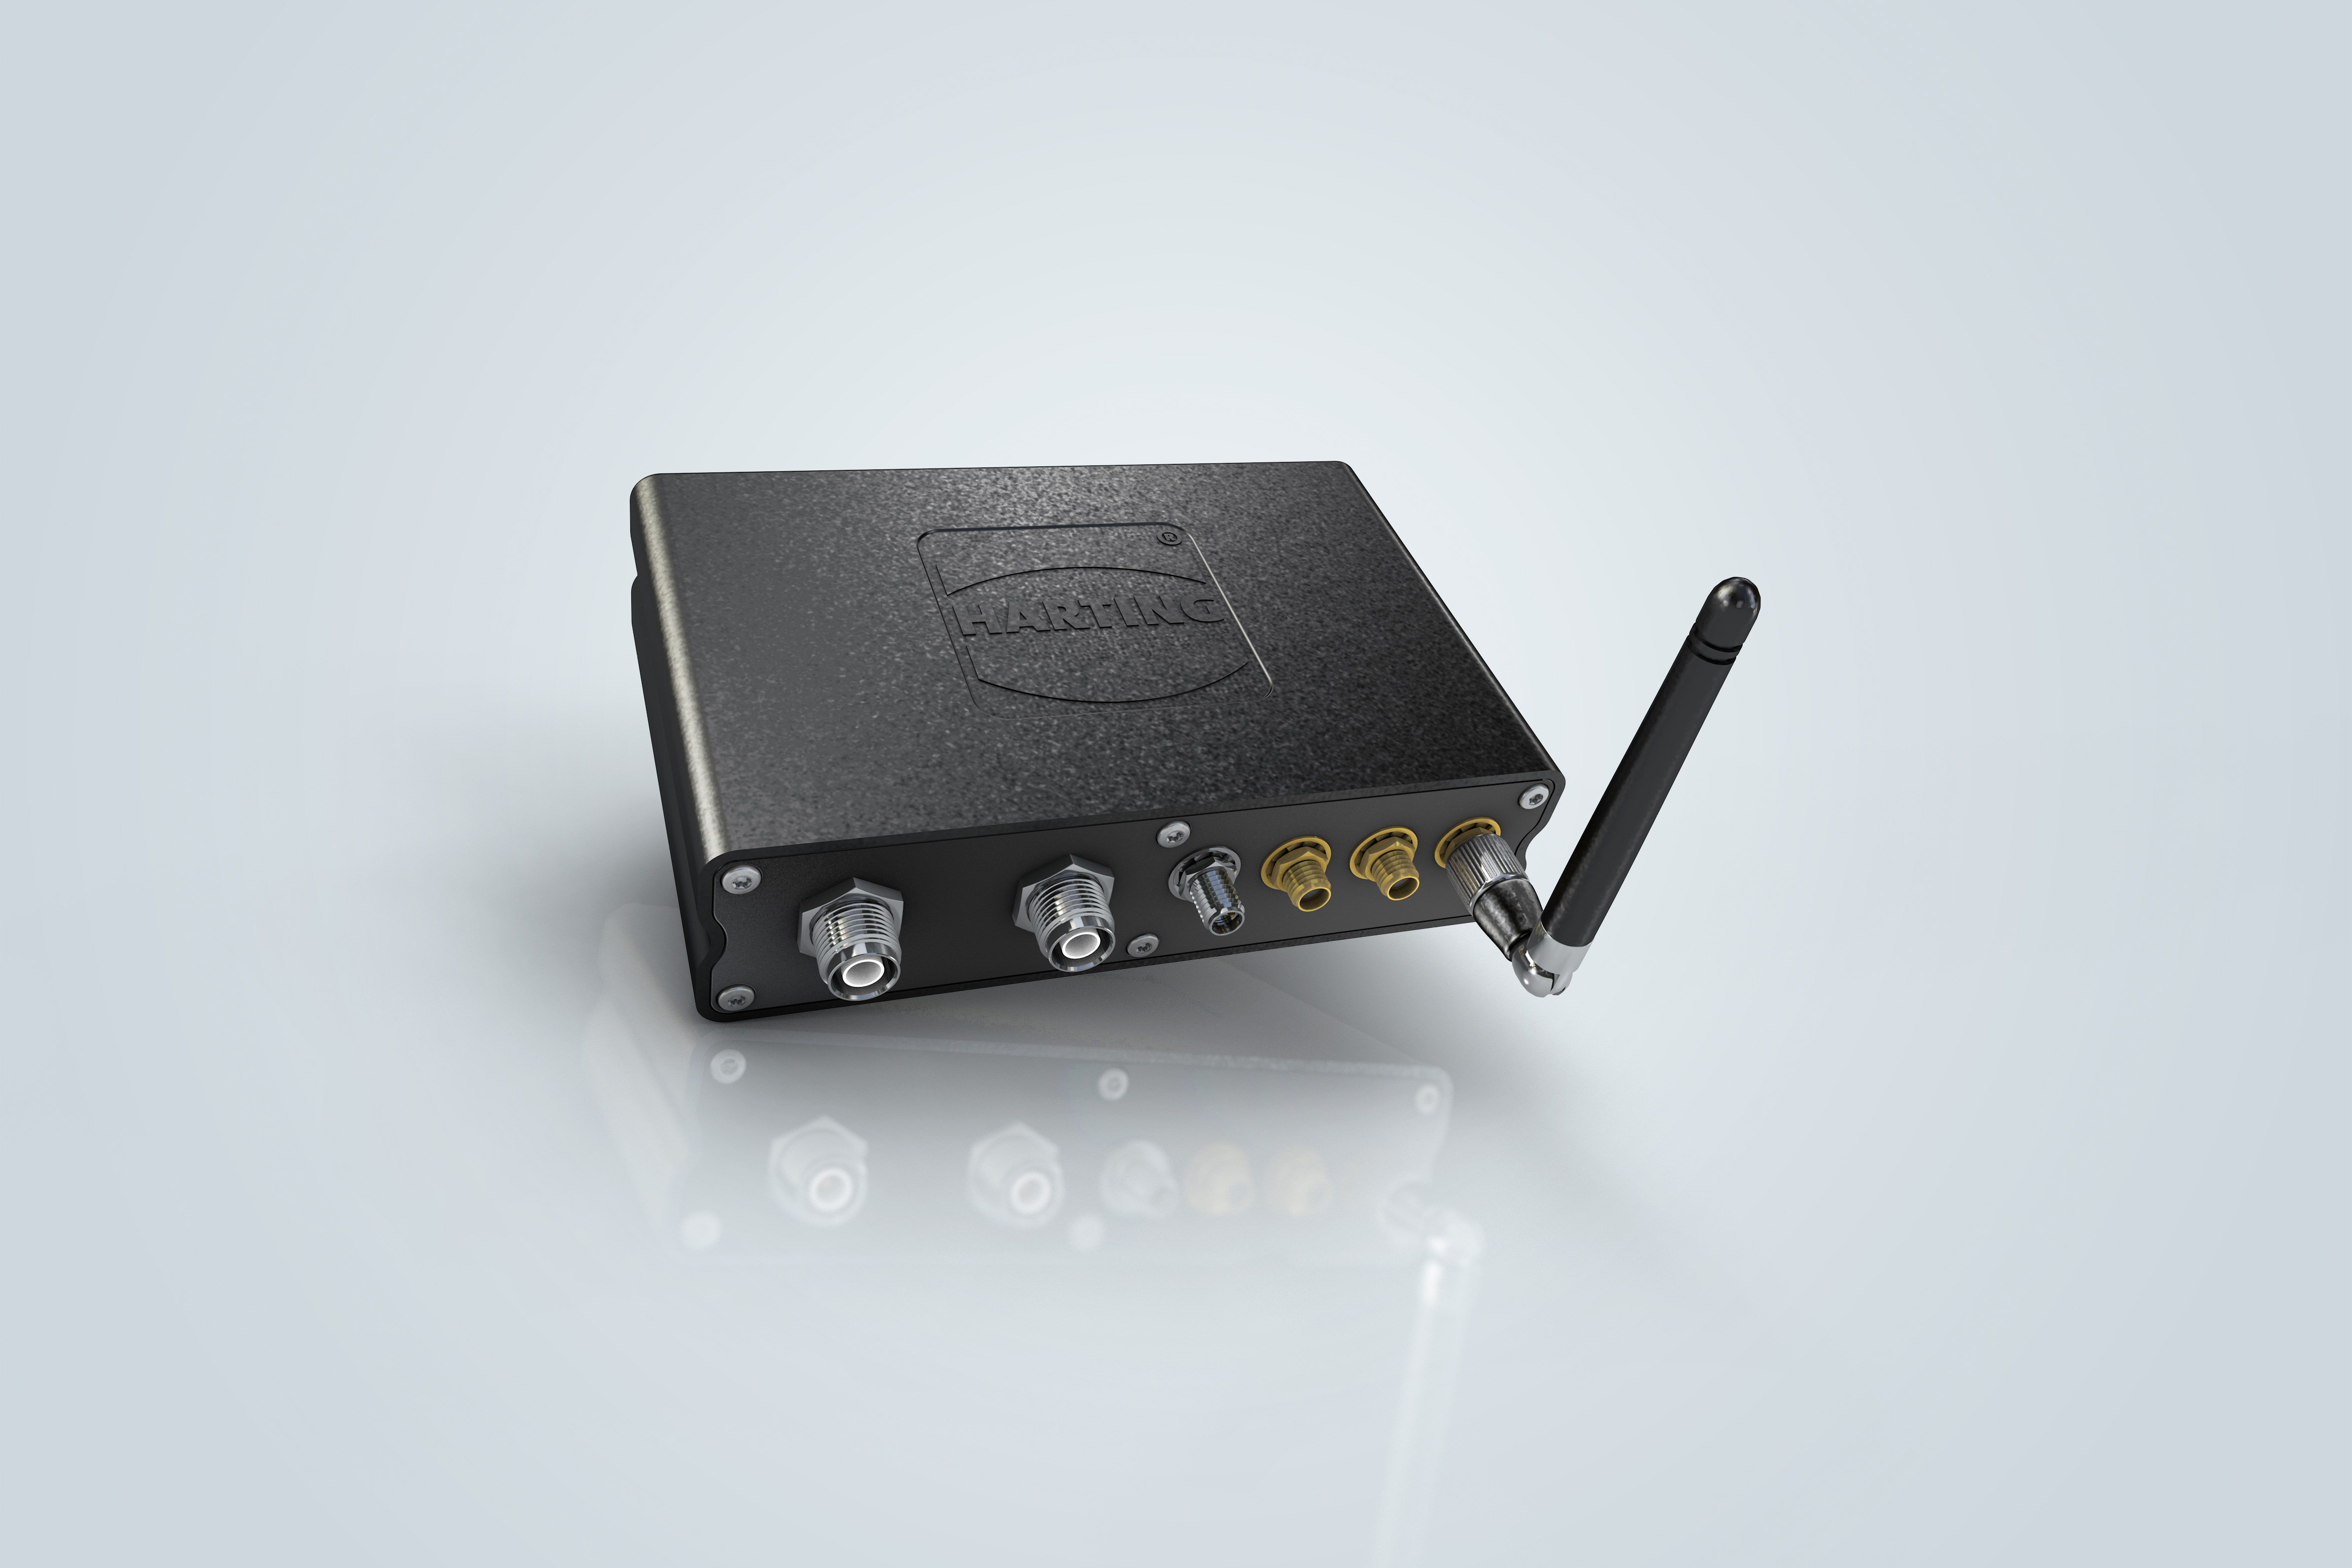 Harting -  RFID读取器系列现已配备W-LAN、3G / 4G（LTE）和蓝牙功能